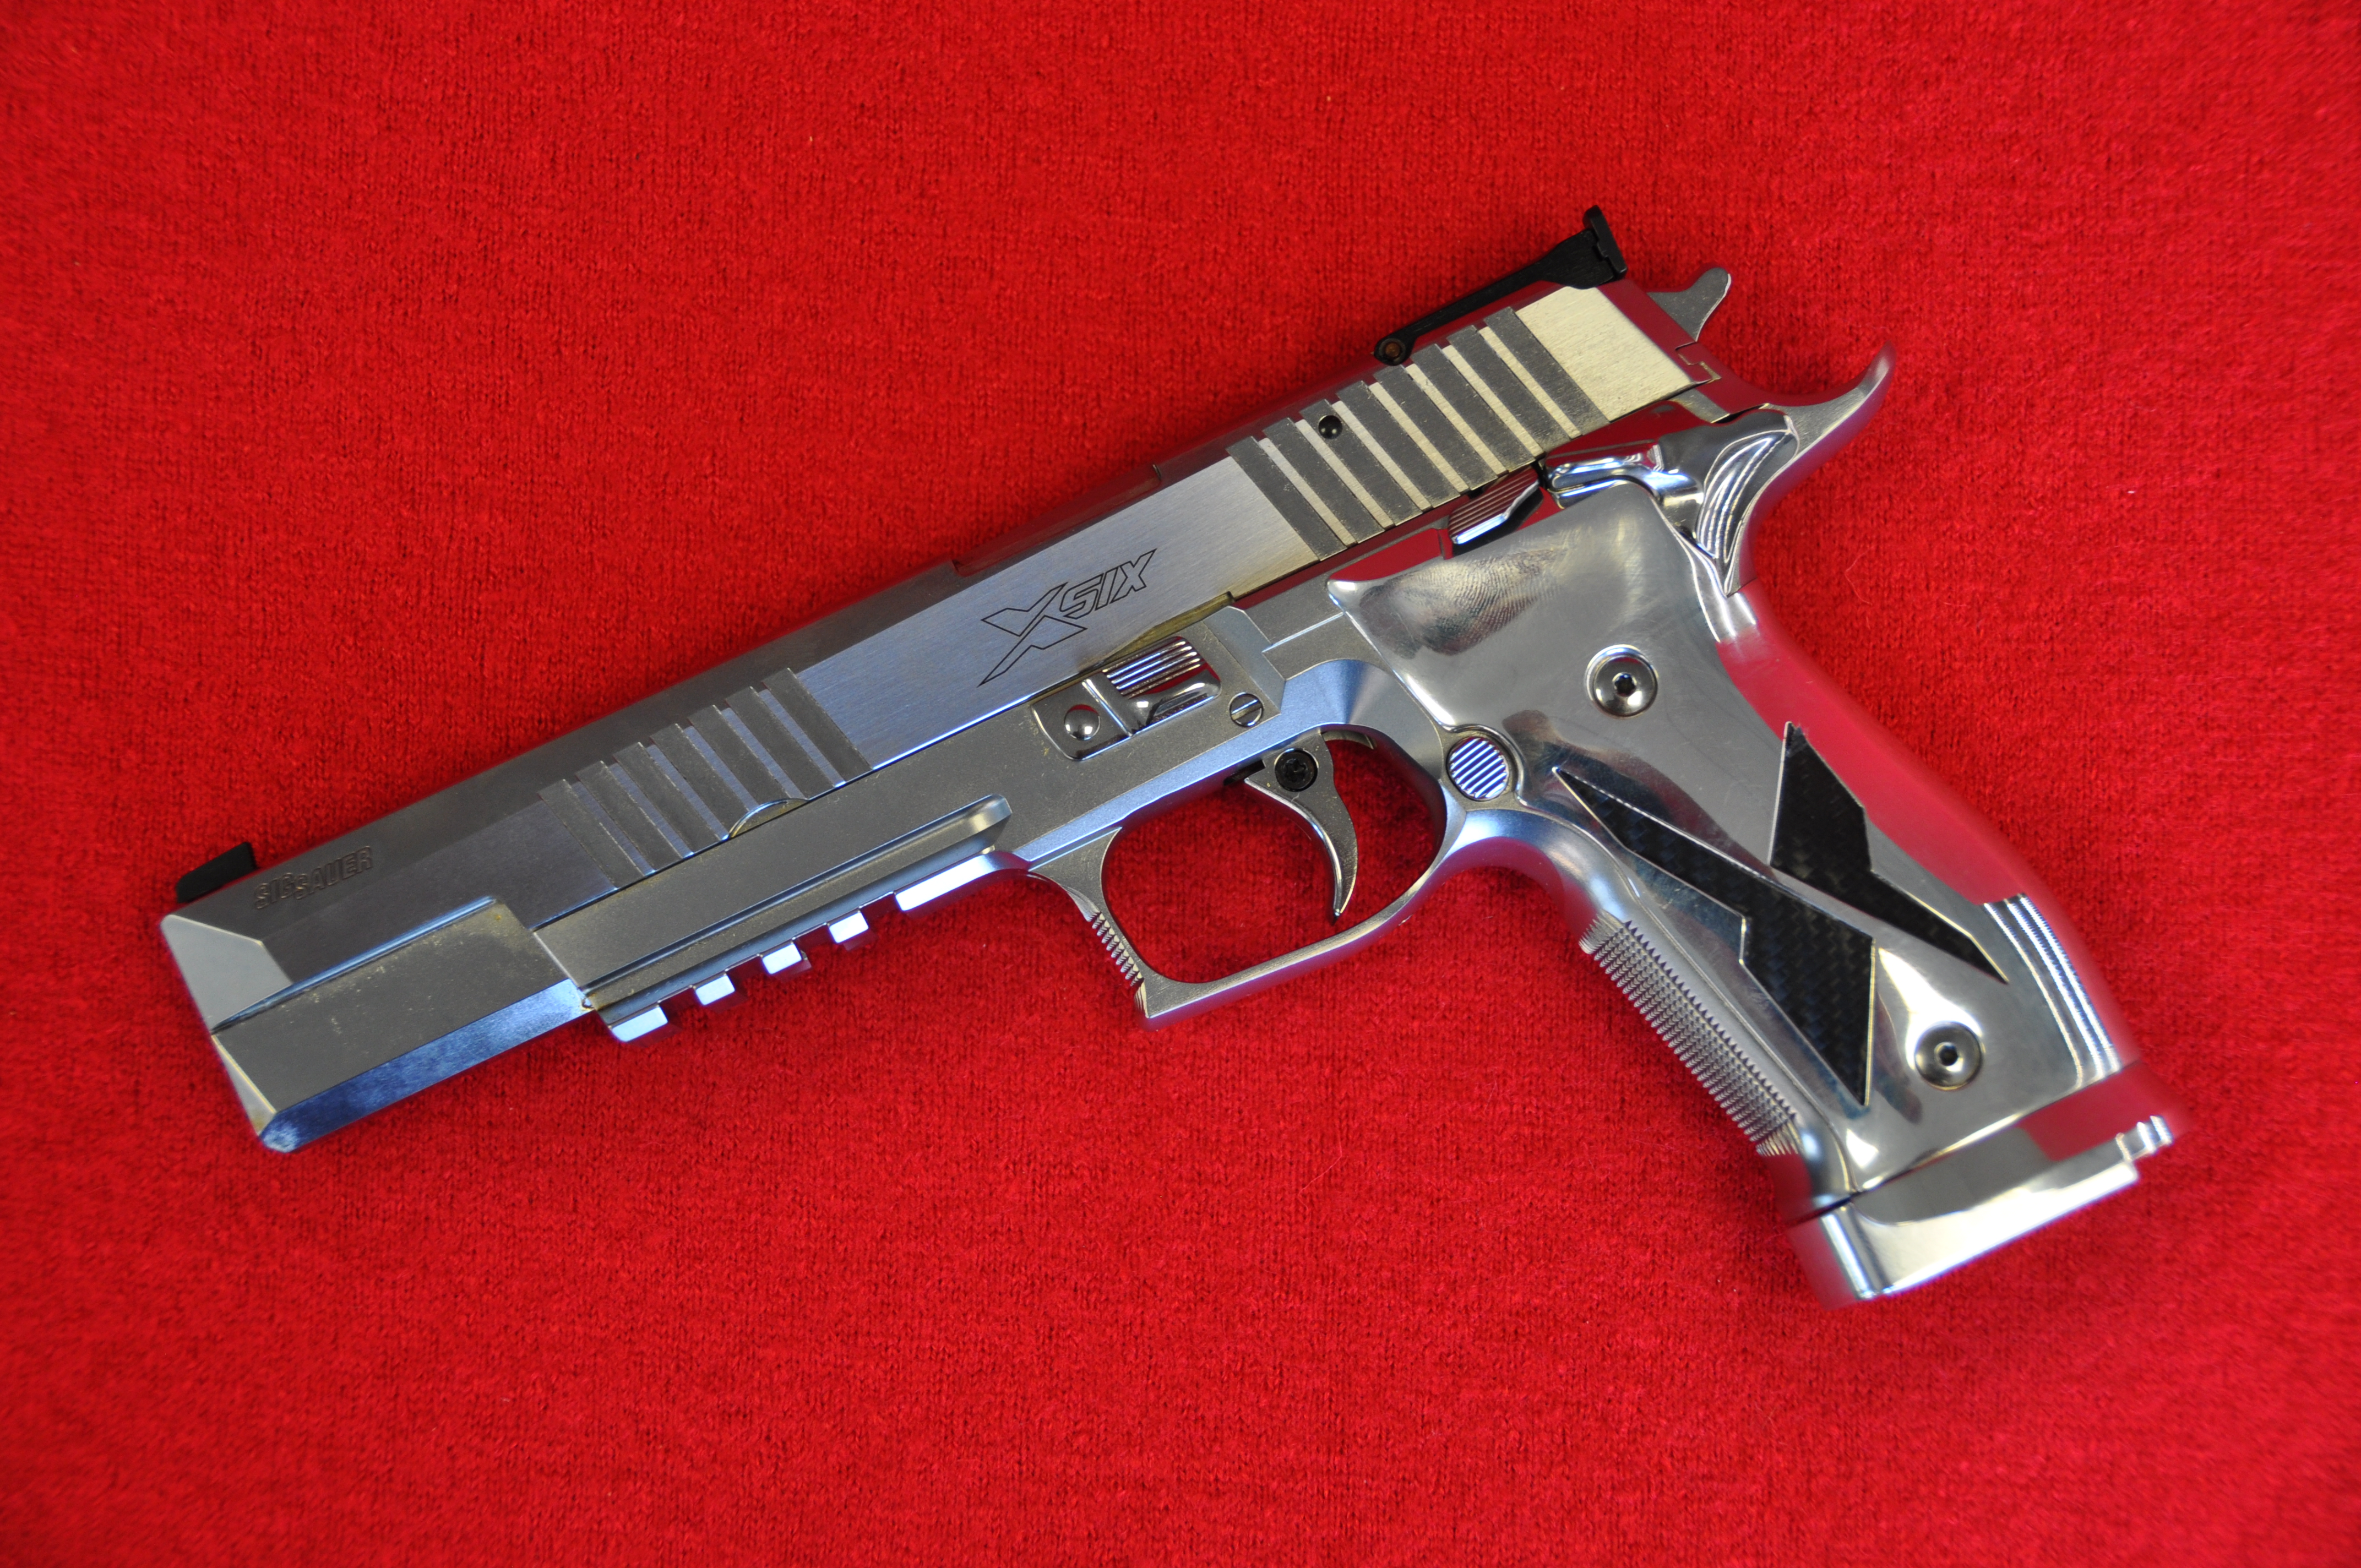 Pistole SIG Sauer P226 X-Six